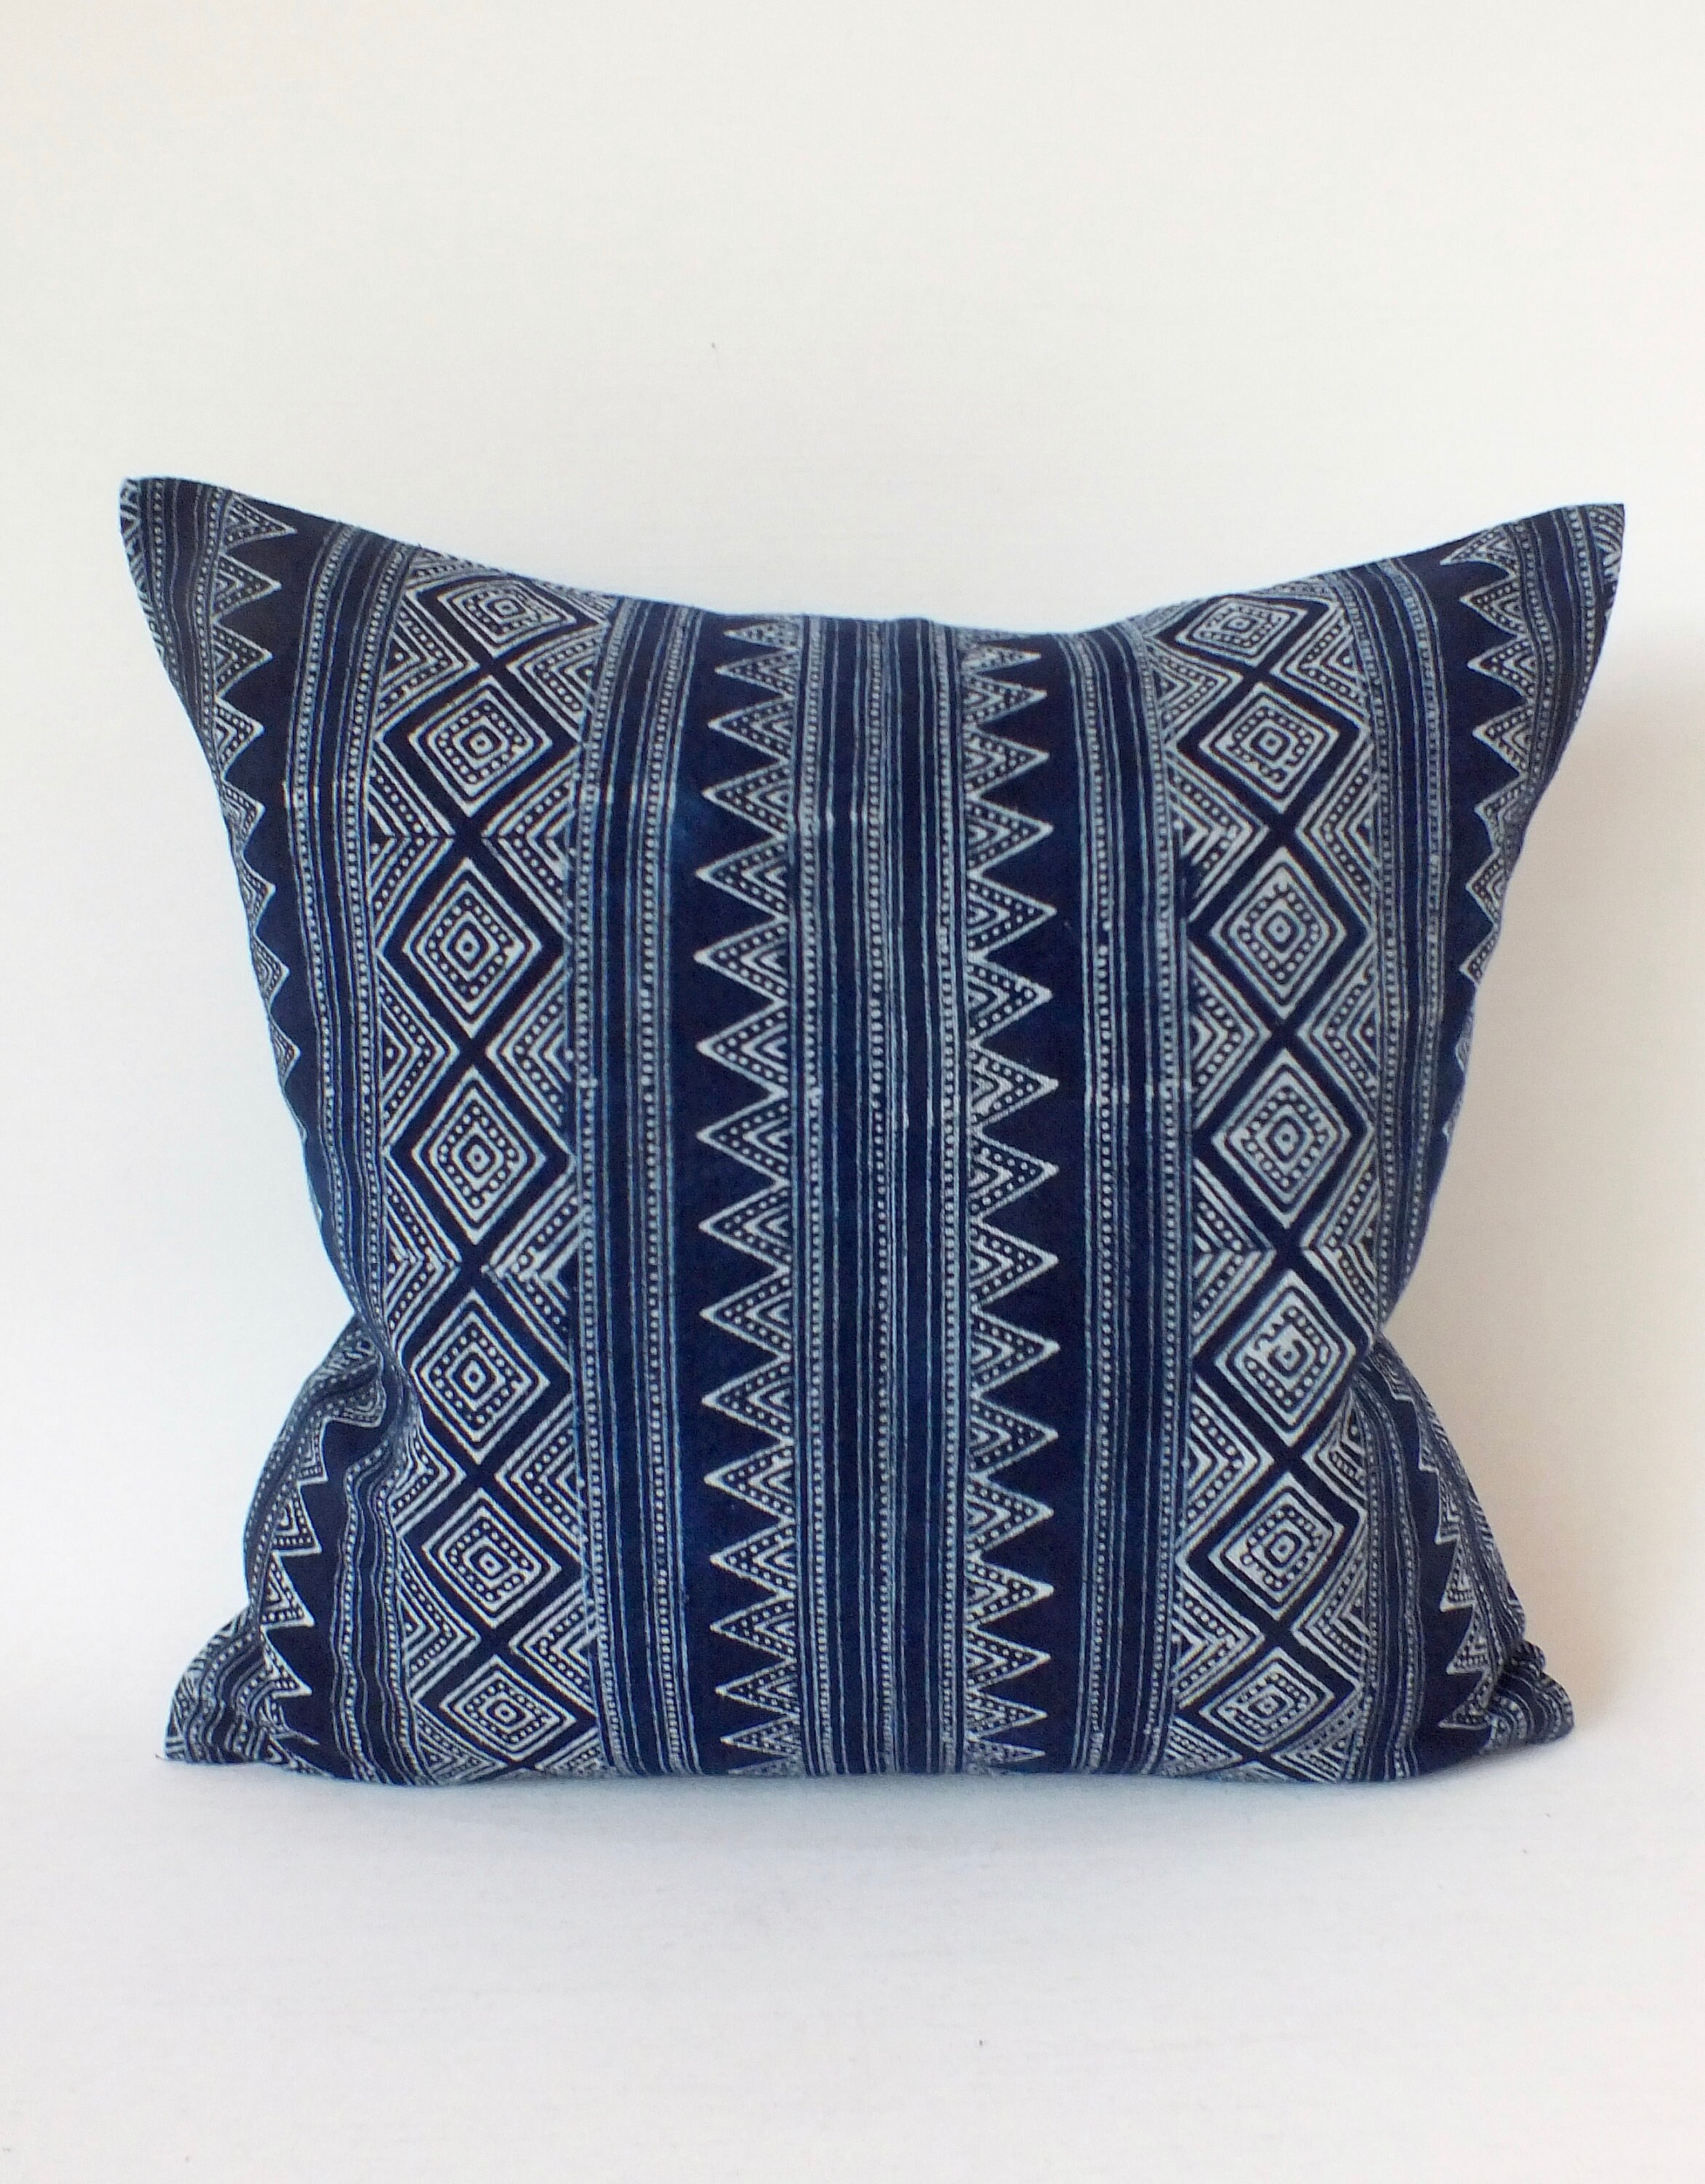 Batik Cushions Throw Pillows Decorative Accent Cover blue | Etsy